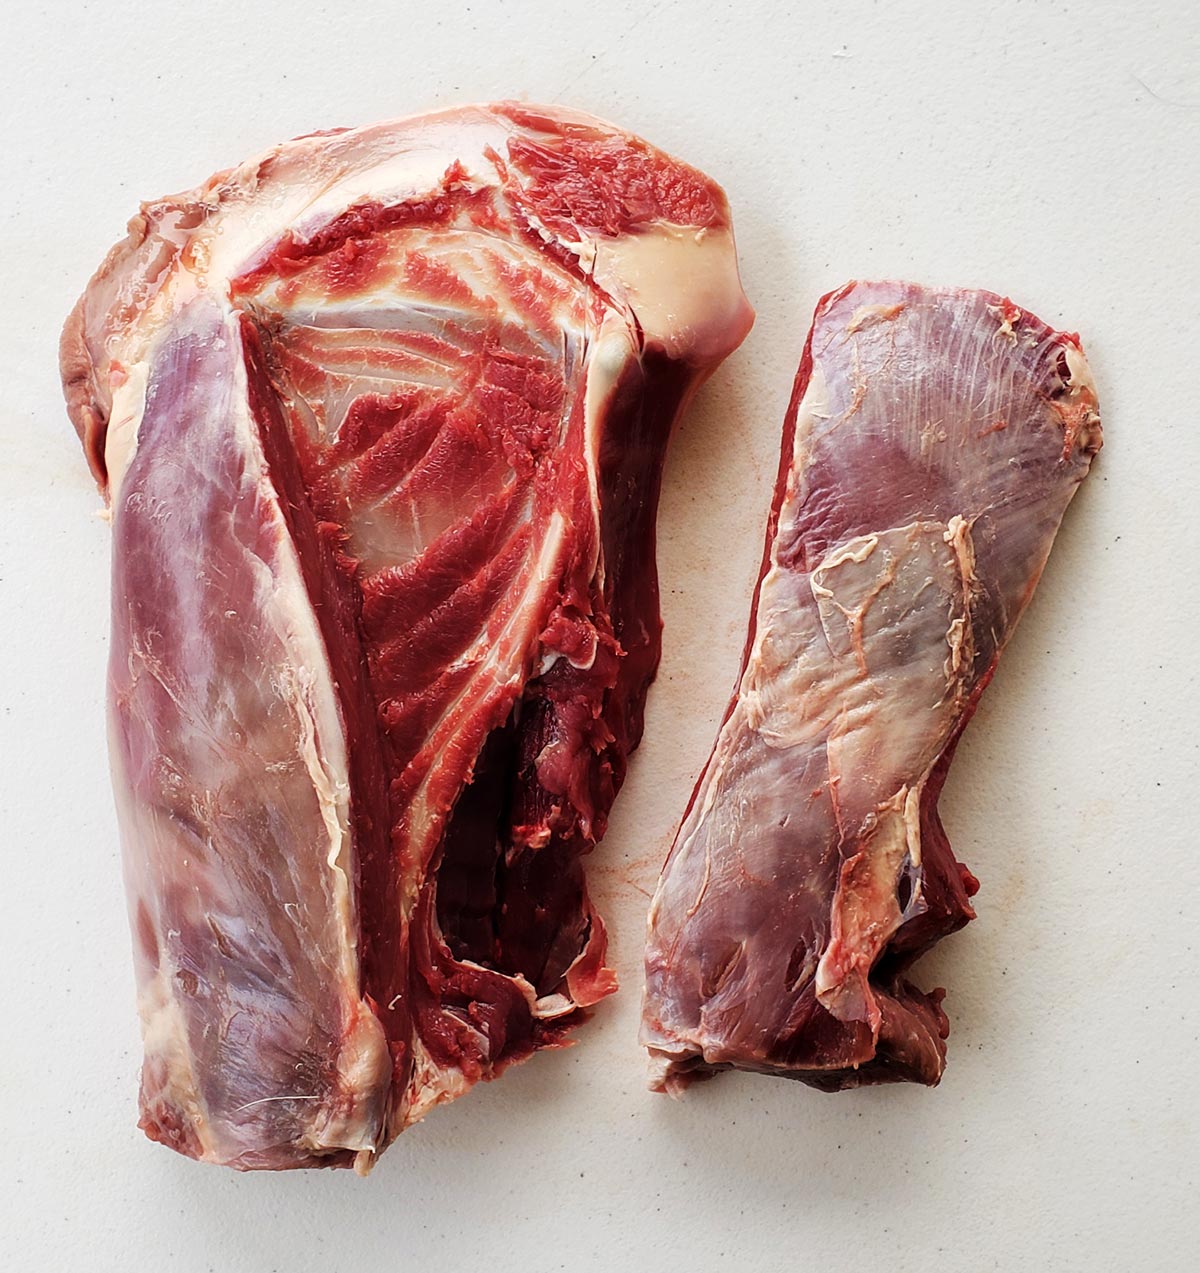 Flat Iron Steak Cut - How to Cut a Flat Iron Steak | Hank Shaw